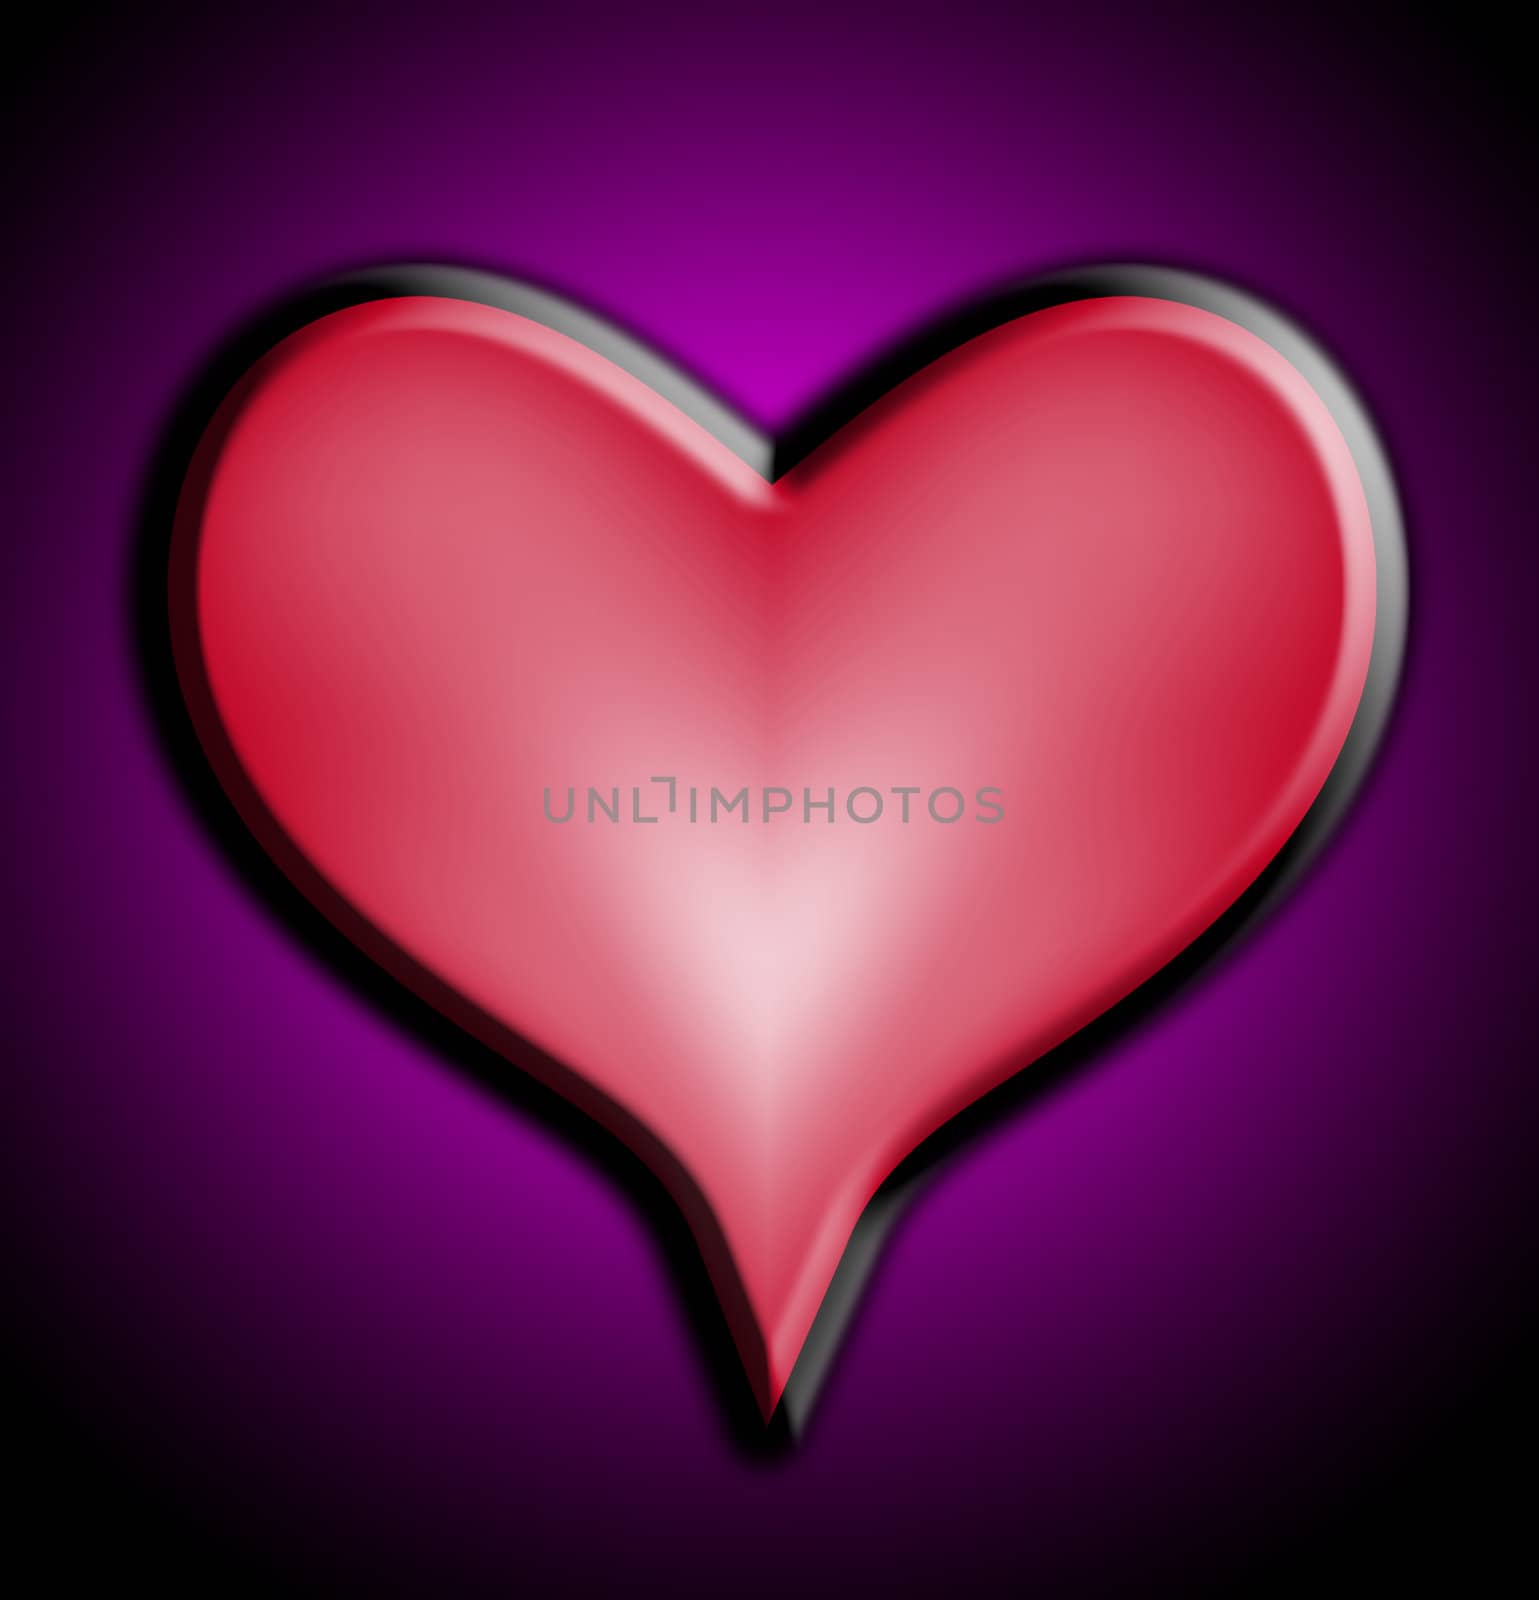 Heart Of Love by harveysart